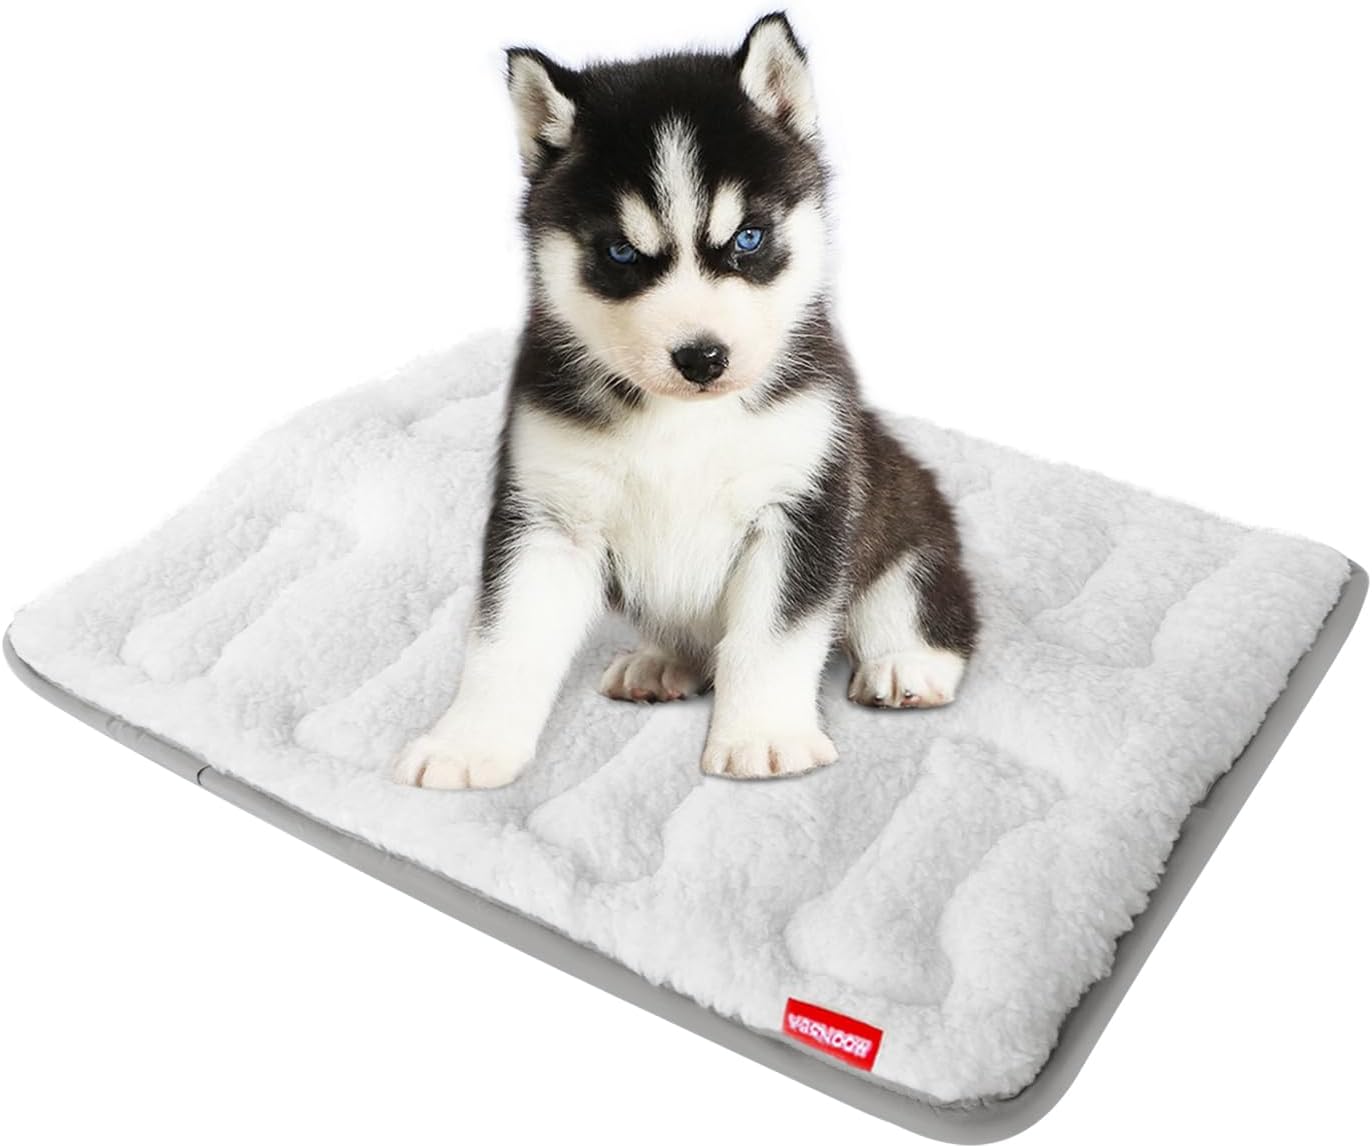 Dog Crate Mat- Soft ,Soft Plush Dog Bed Pad Machine Washable Crate Pad, Anti-Slip Bottom, White-Moonsea Bedding